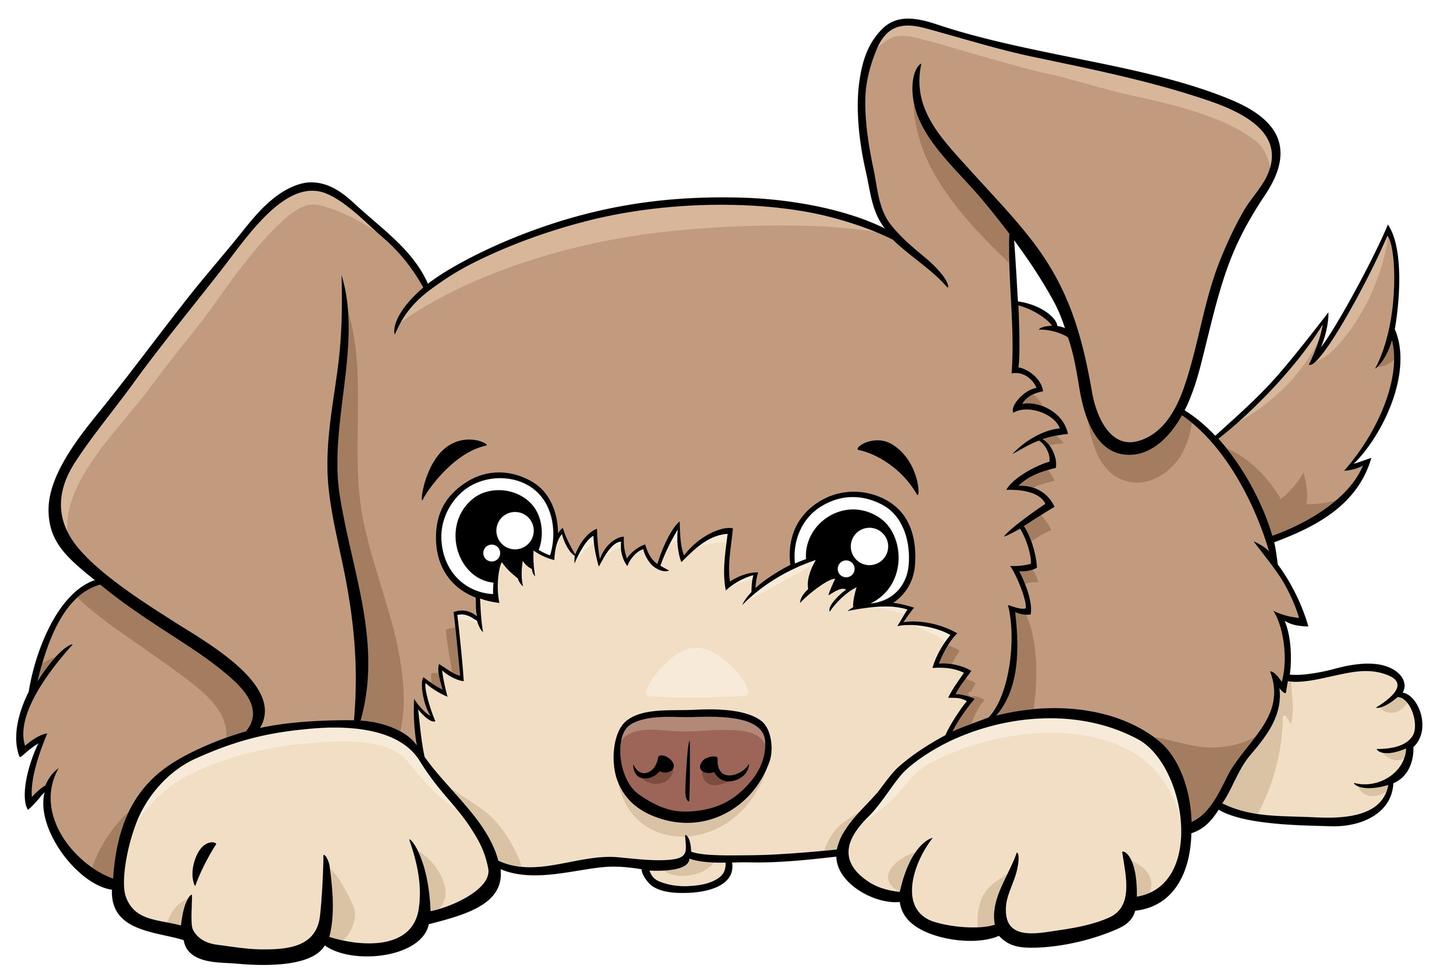 cartoon cute puppy comic animal character vector